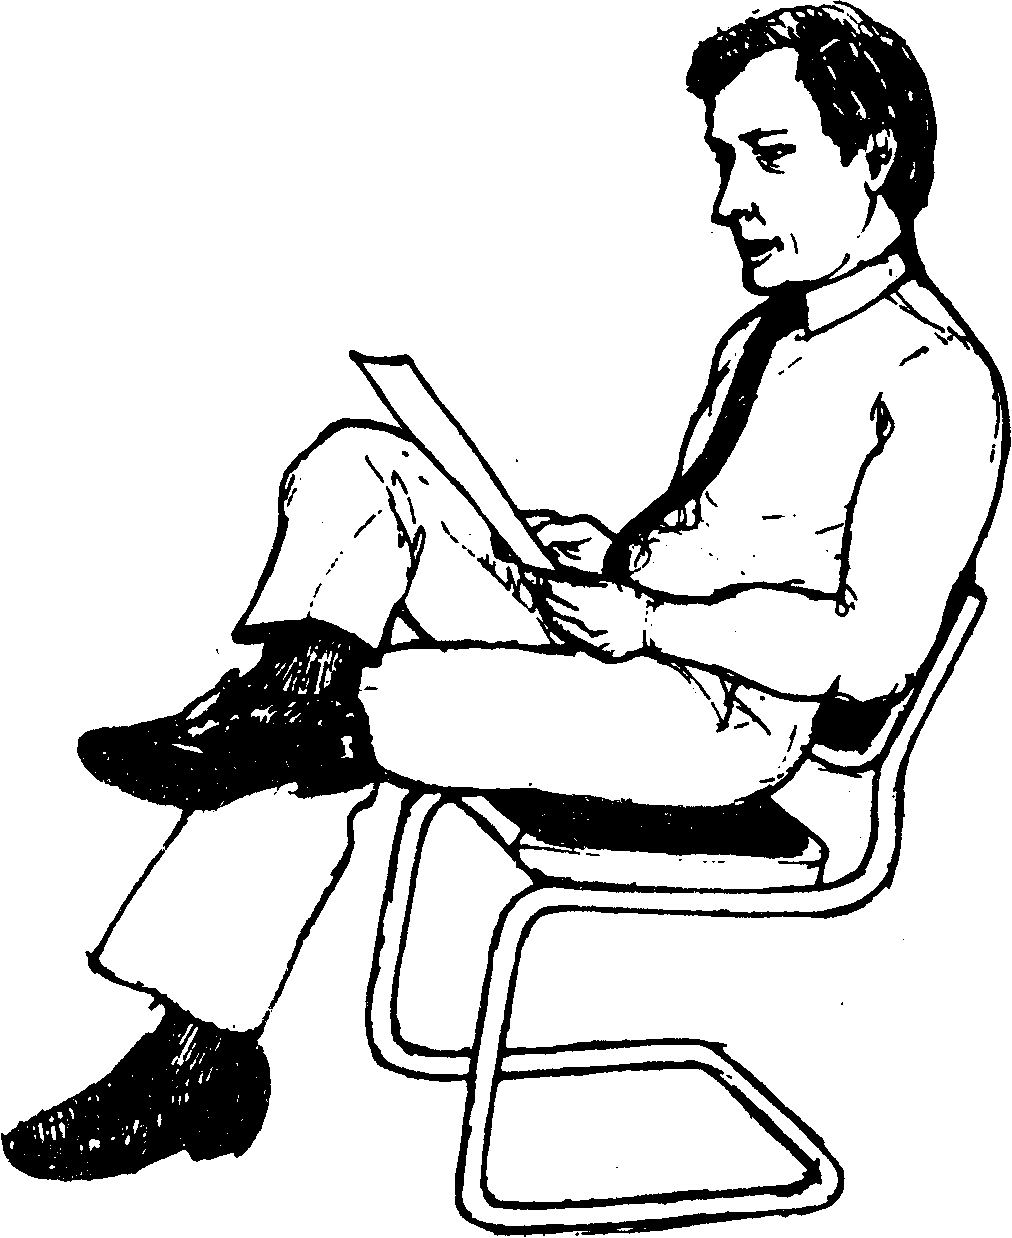 человек сидит на стуле боком